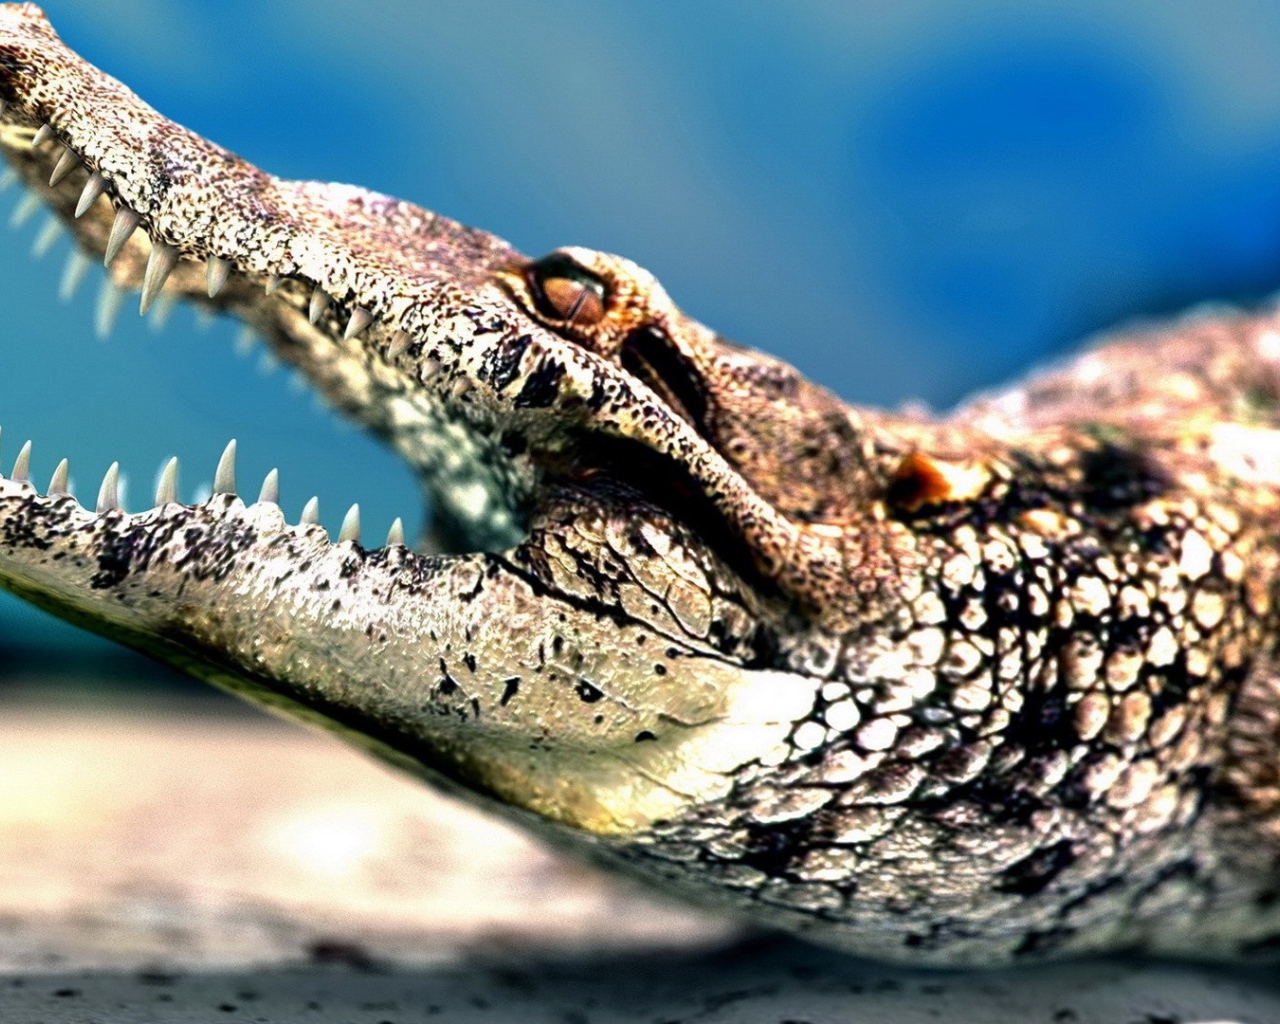 Jaws of a crocodile